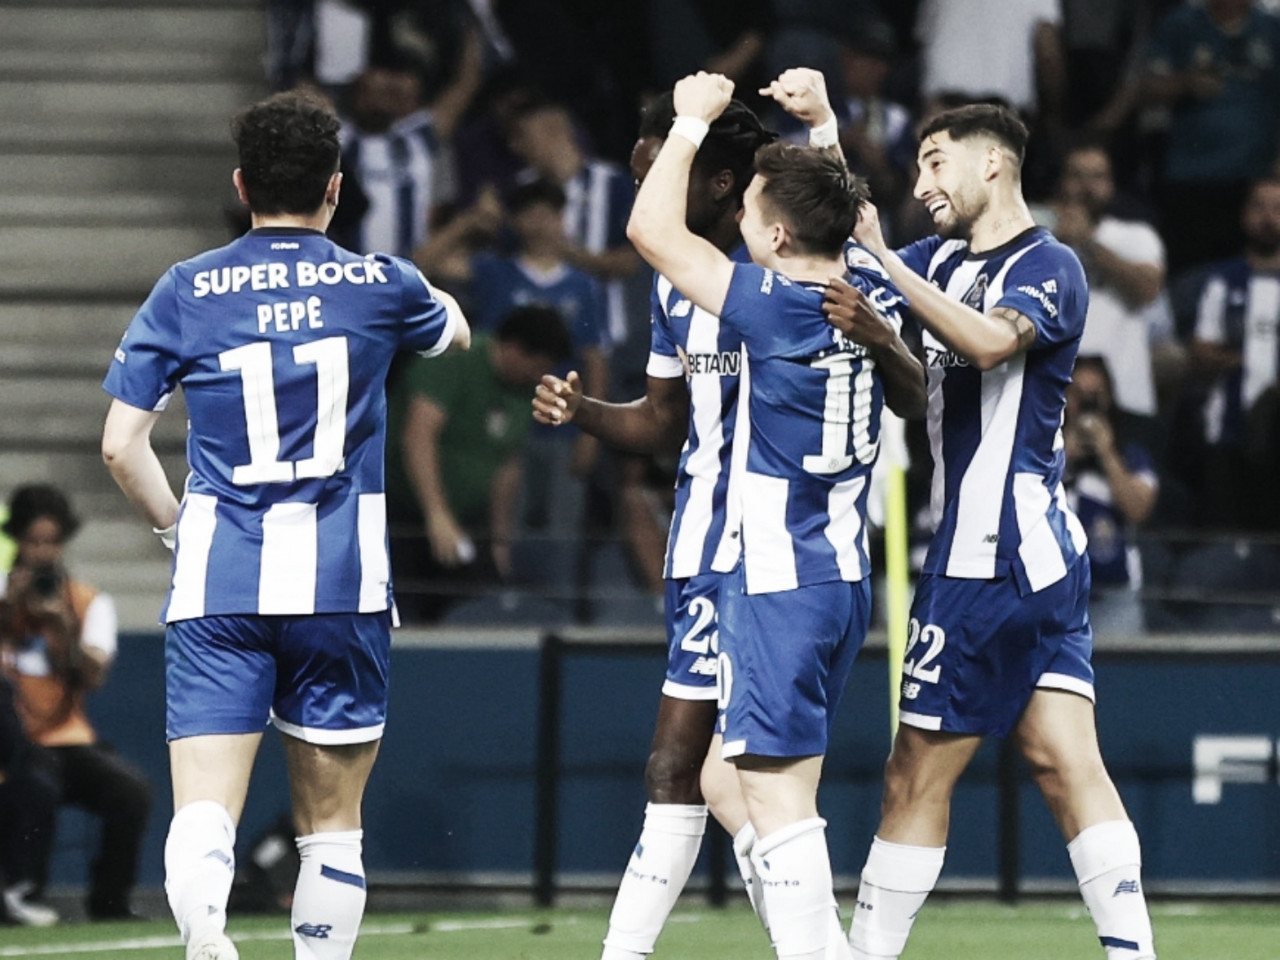 Casa Pia vs Porto LIVE Score Updates: Nico González Scores (1-2)